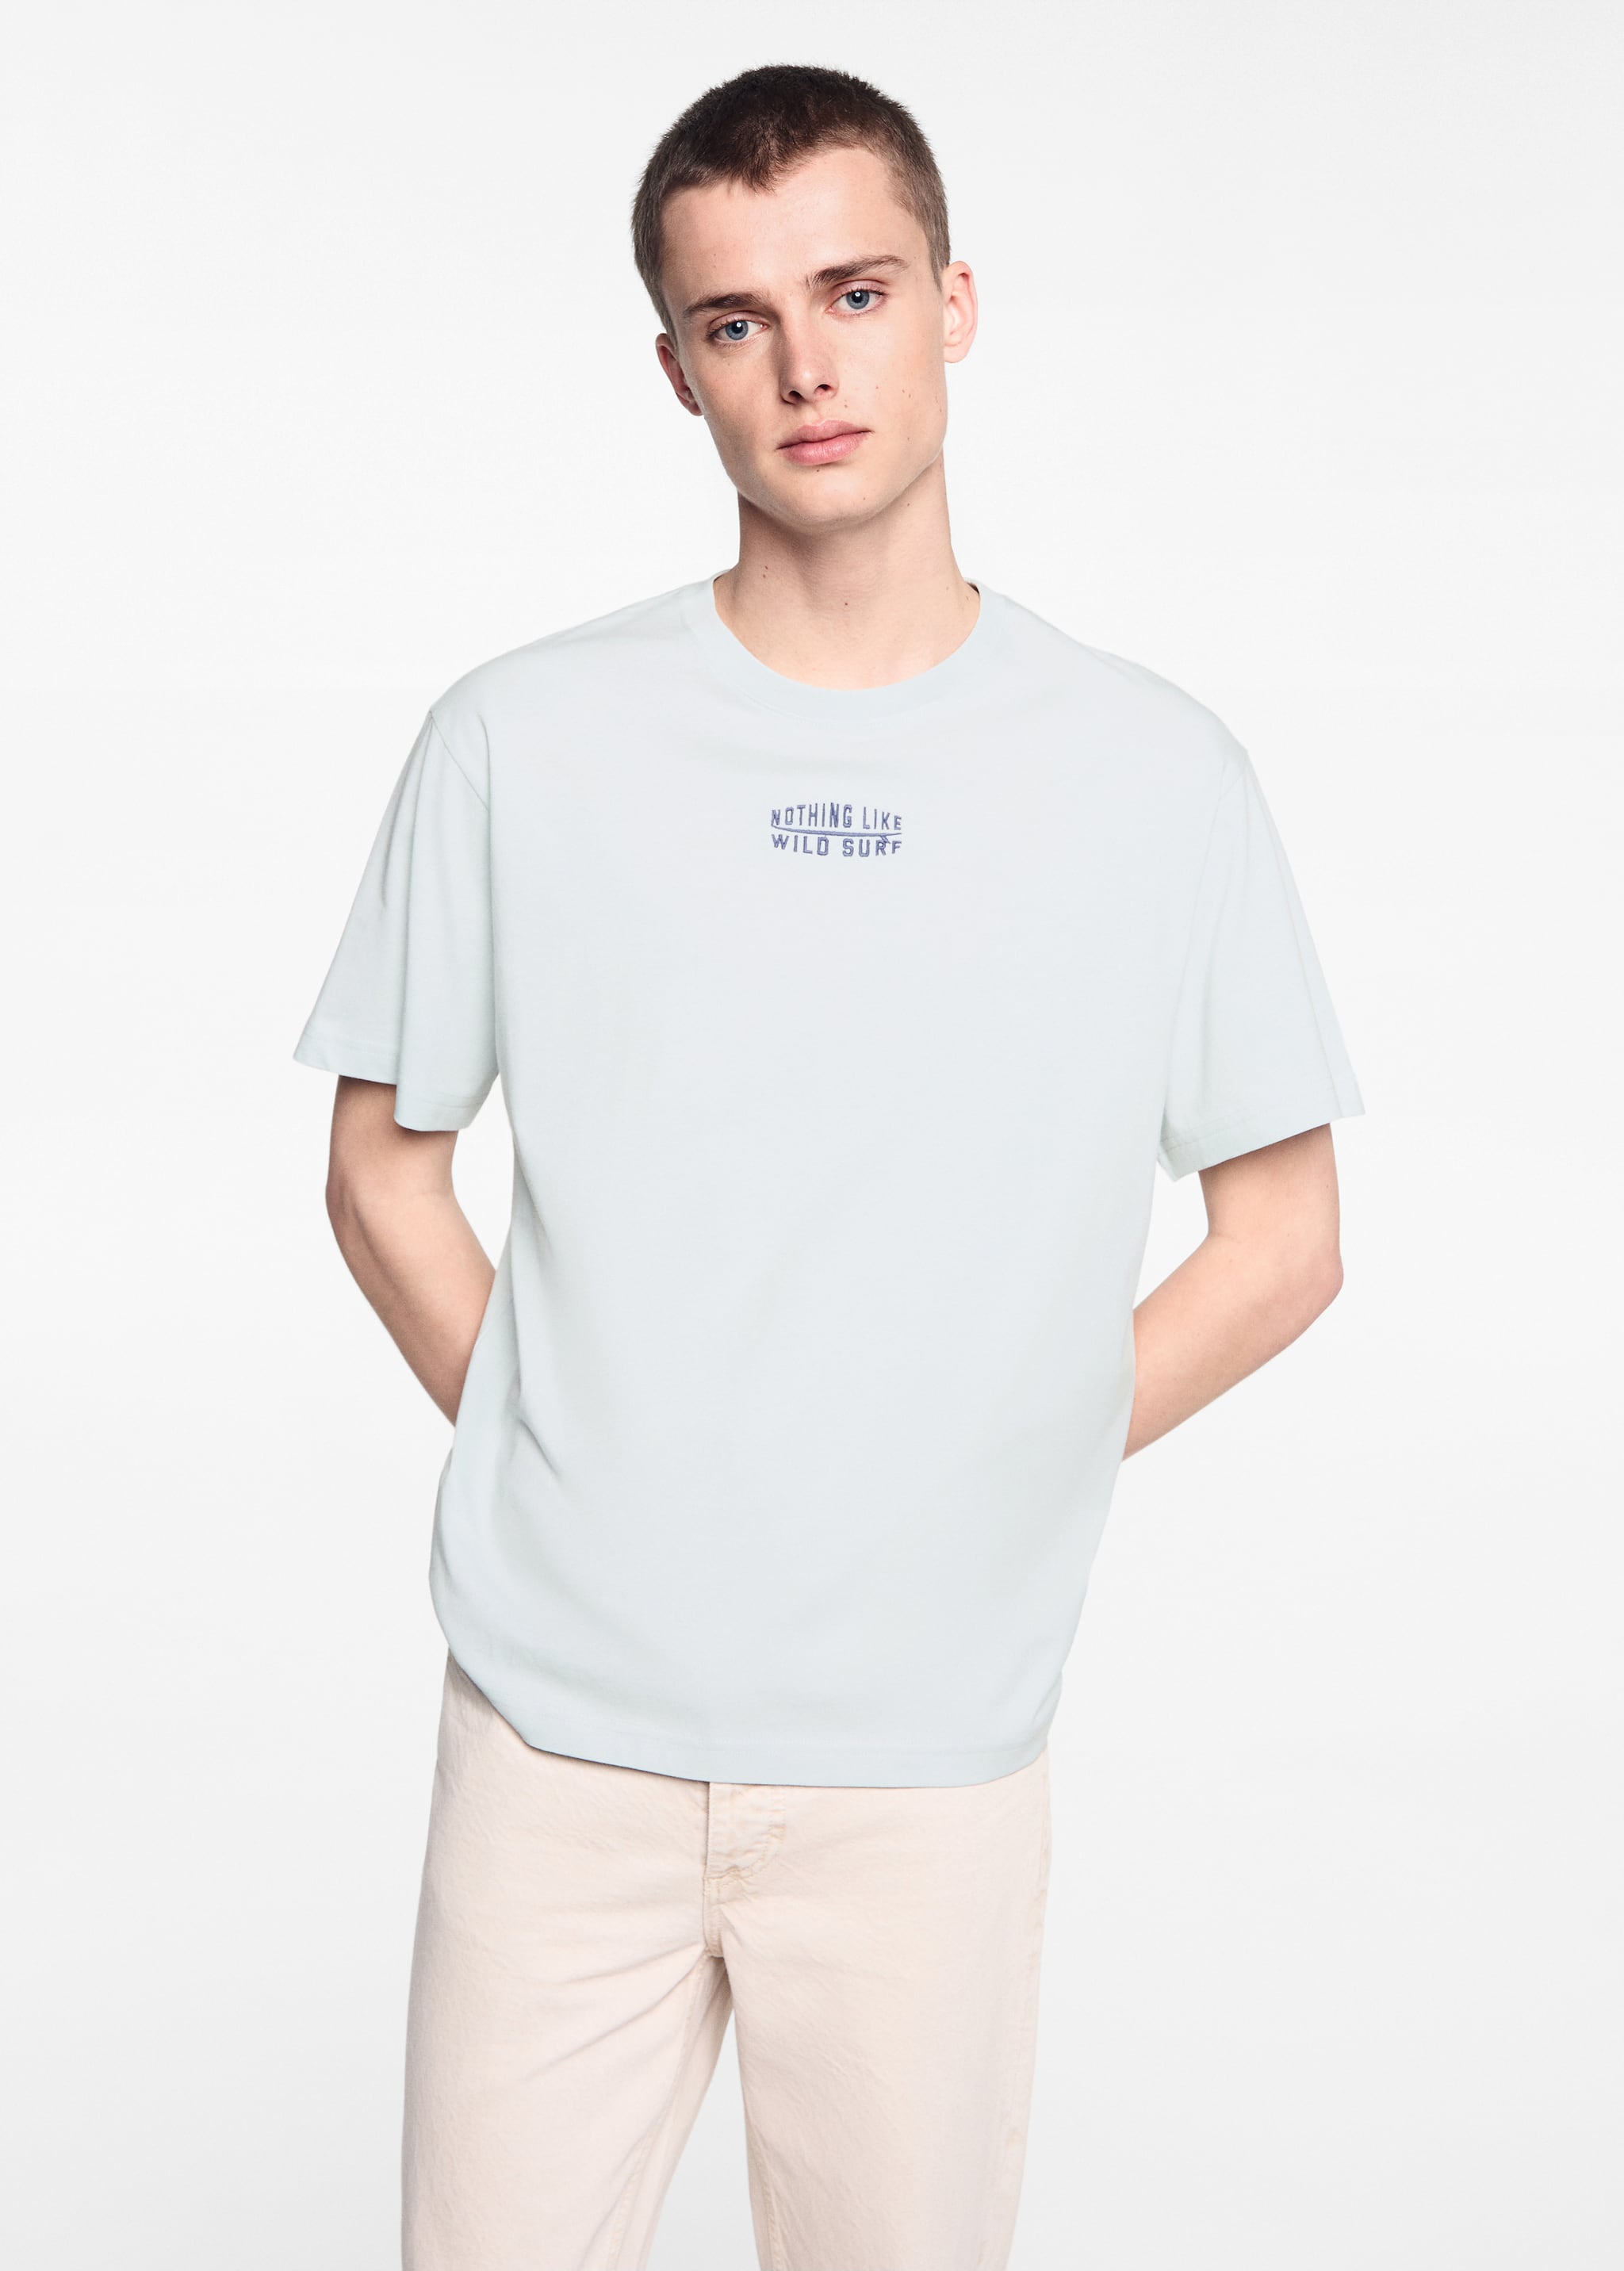 Embroidered cotton message t-shirt - Medium plane